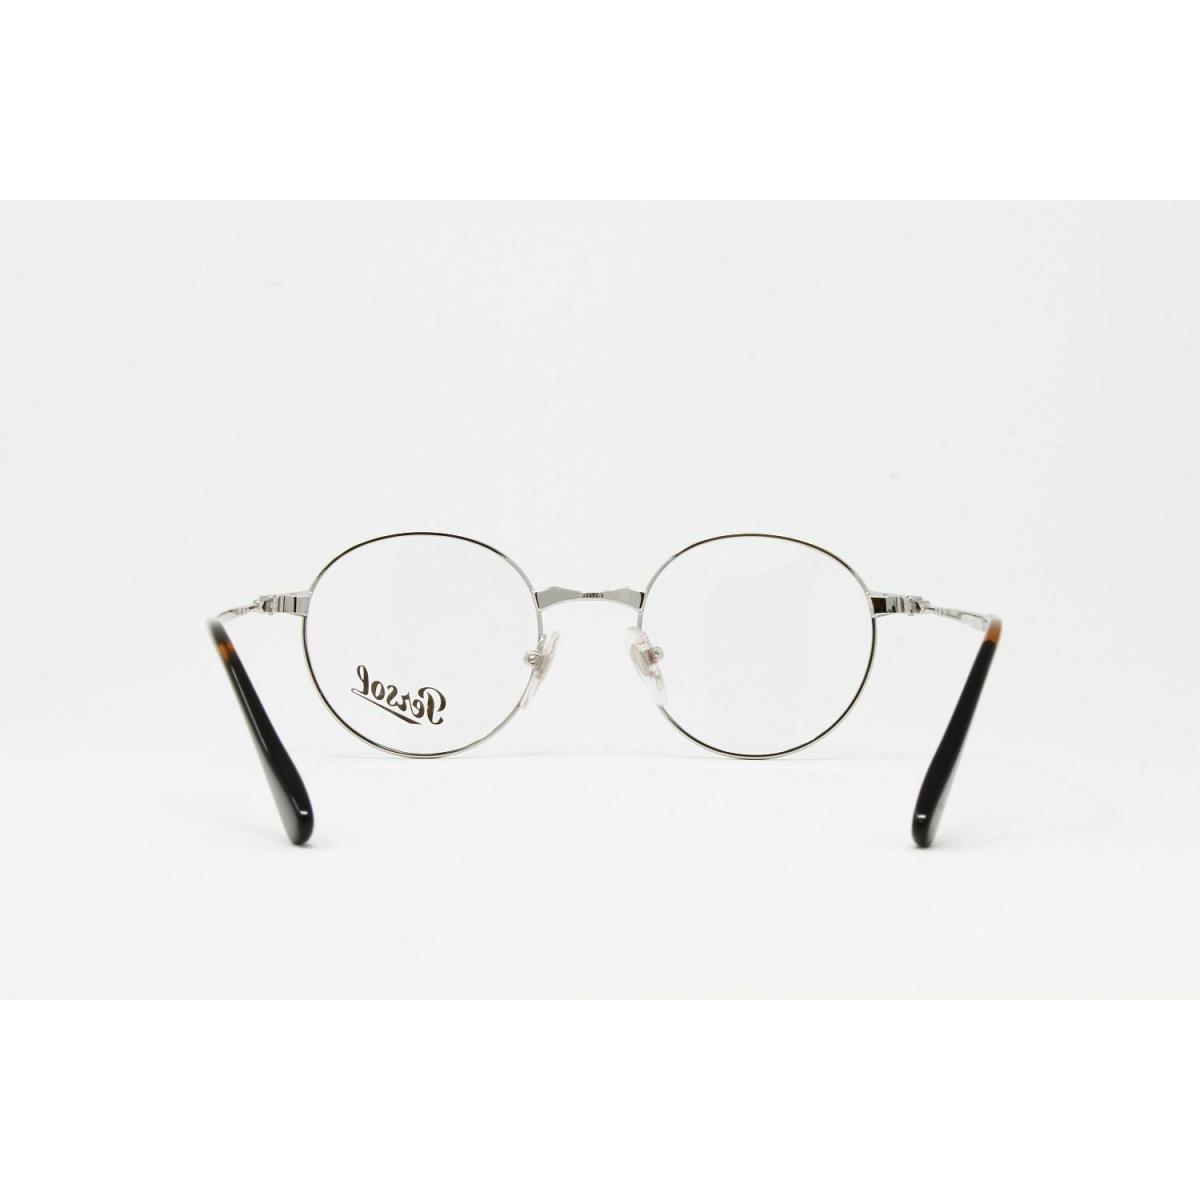 Persol eyeglasses  - Silver Frame 2